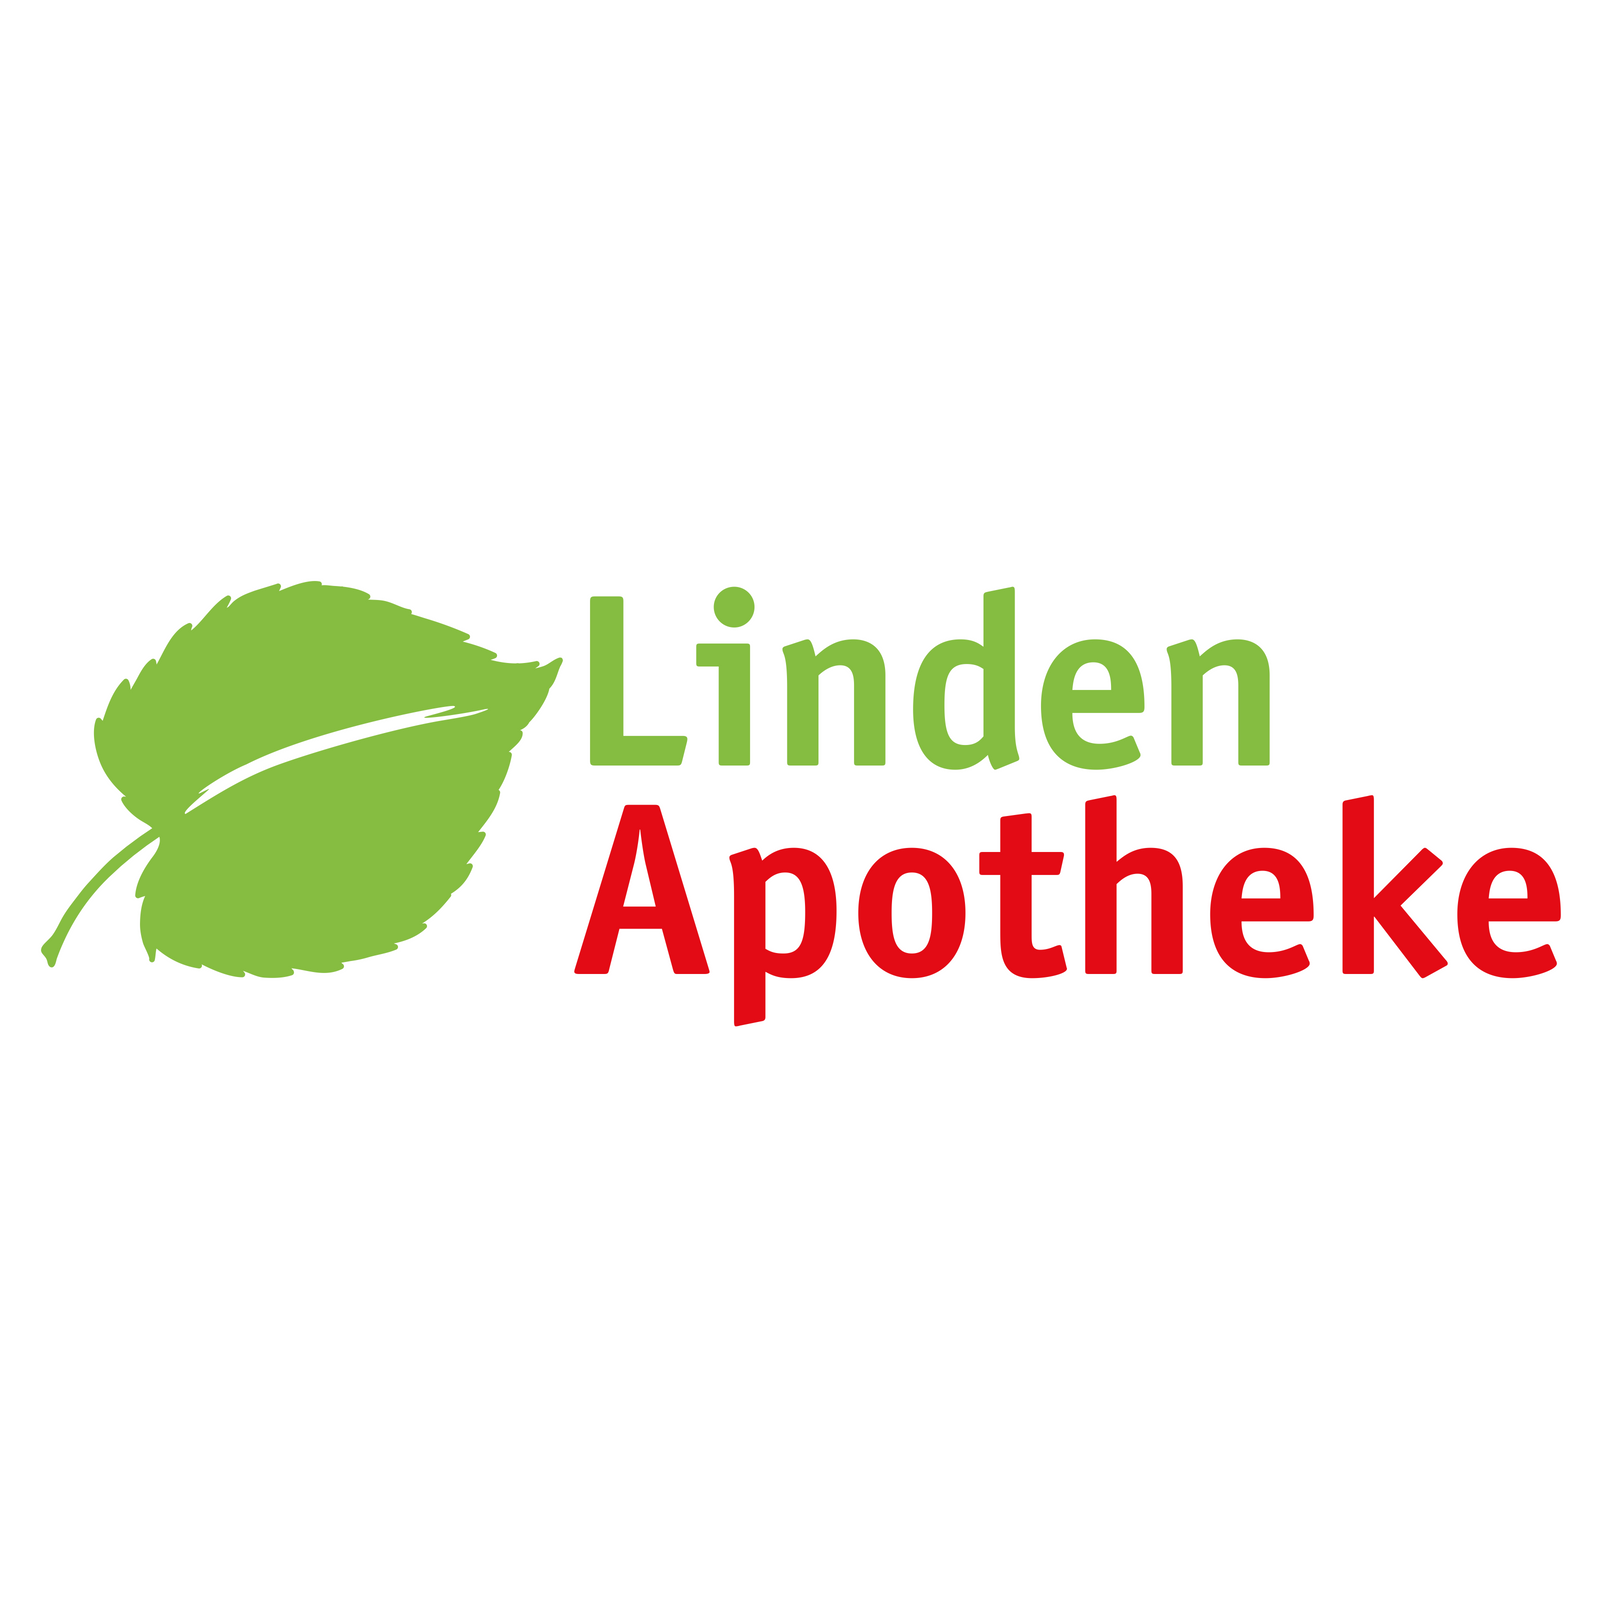 Linden-Apotheke Logo